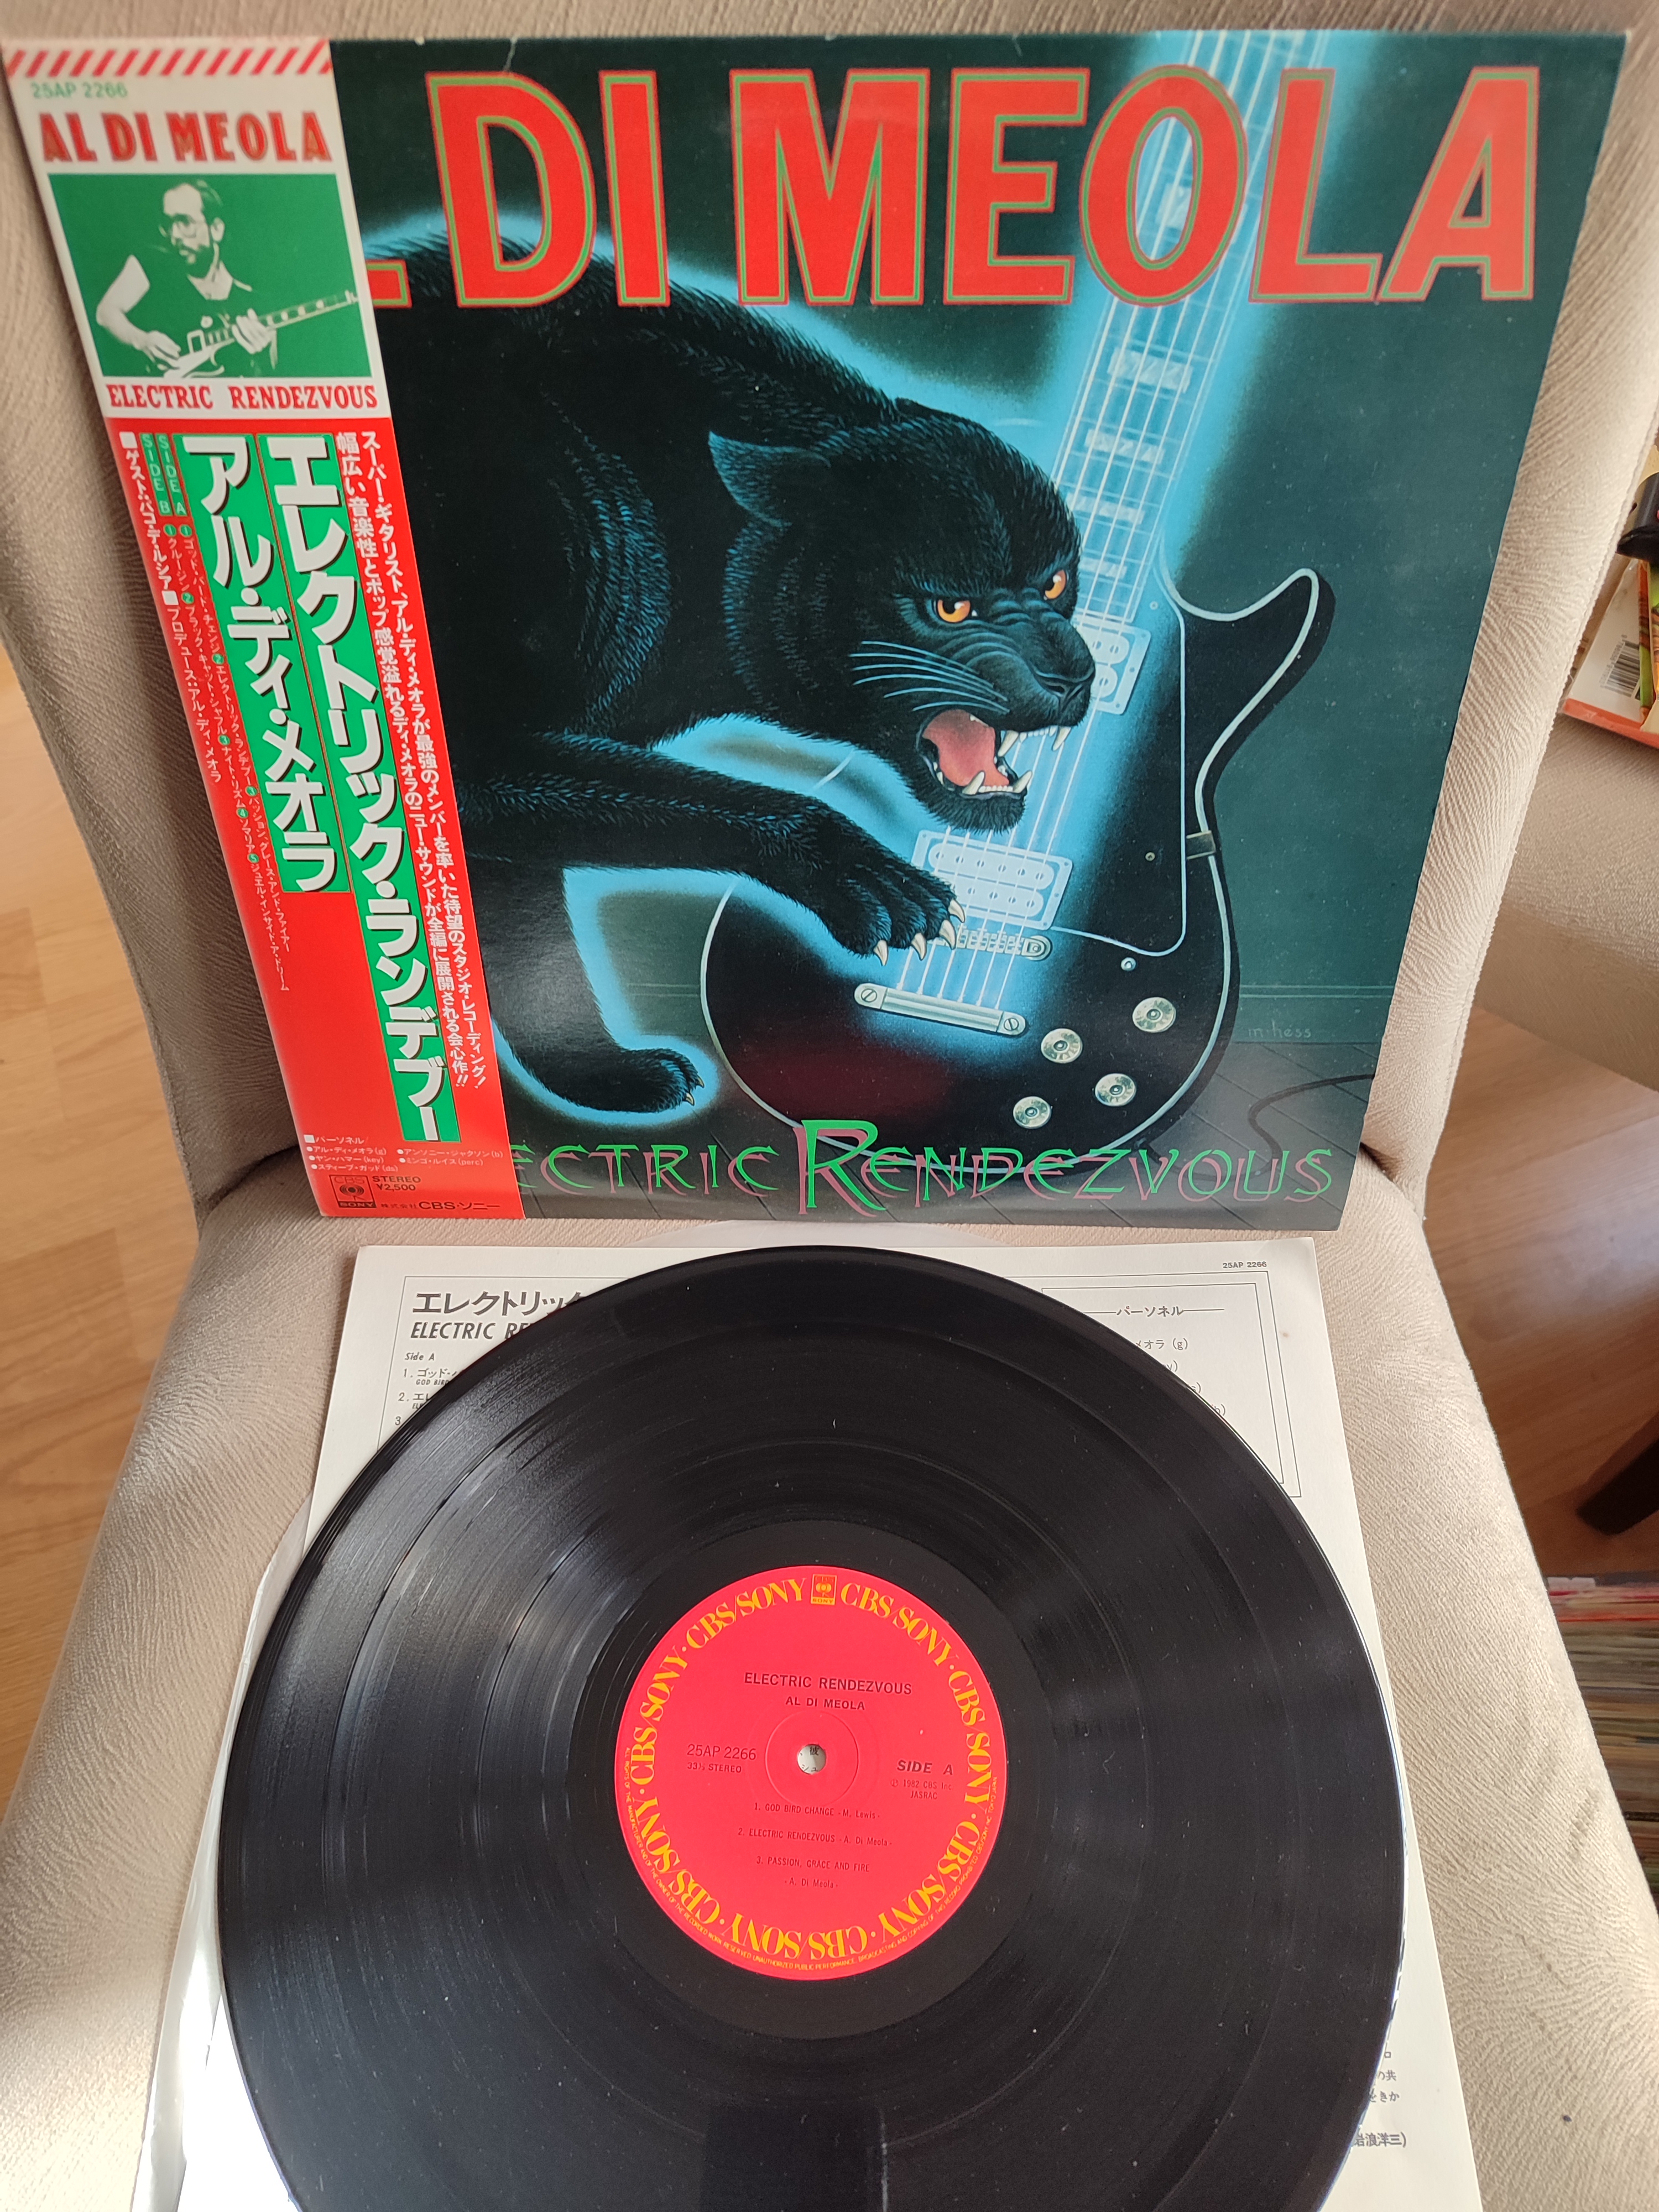 AL DI MEOLA - Electric Rendezvous - 1982 Japonya Basım 33 lük LP Plak Albüm - Obi’li Temiz 2. el